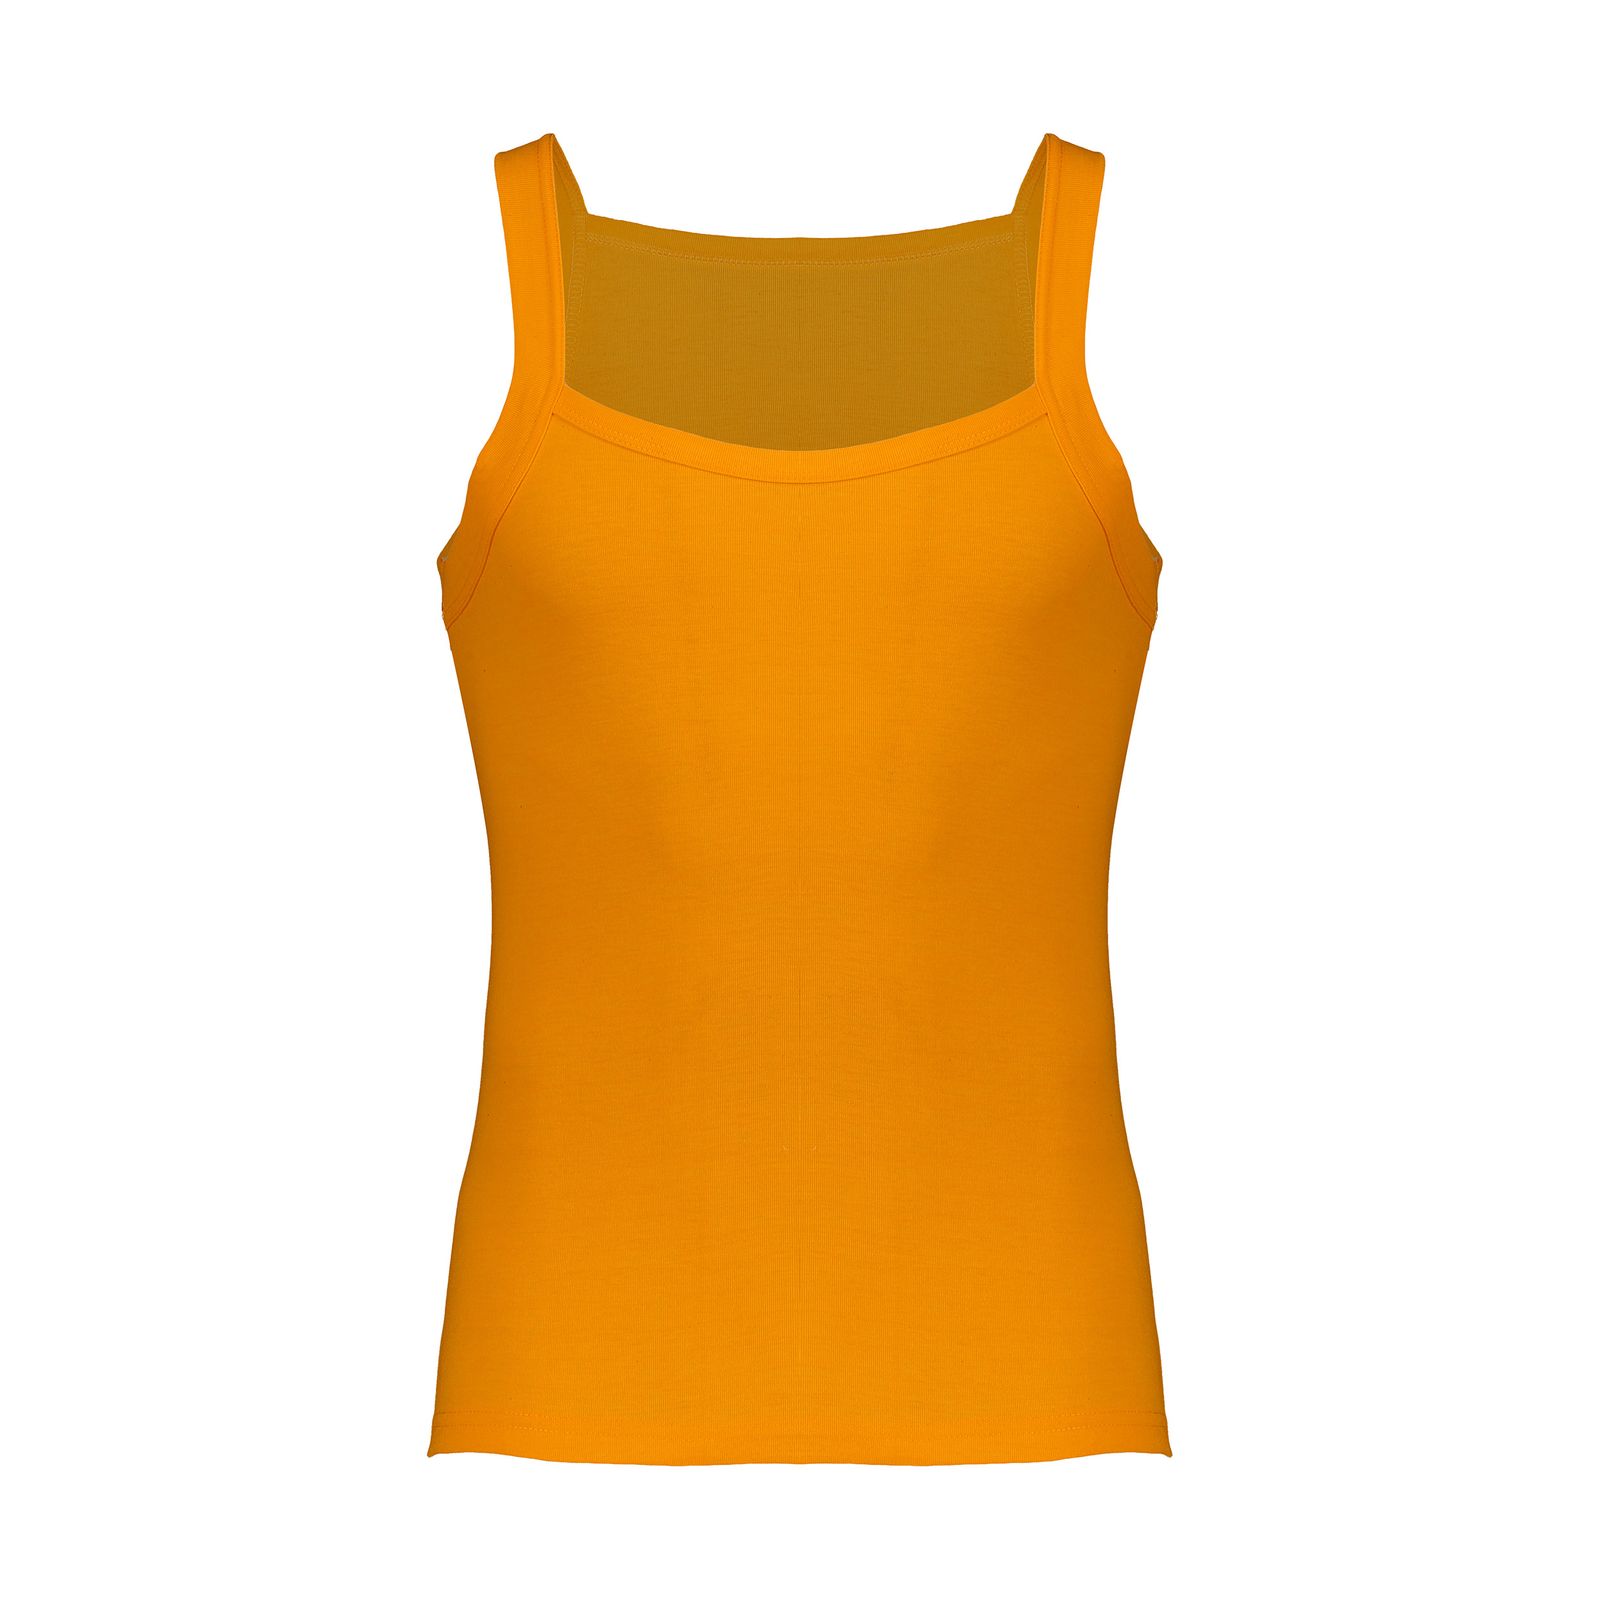 زیرپوش مردانه حجت مدل Hoj-kh رنگ نارنجی -  - 1